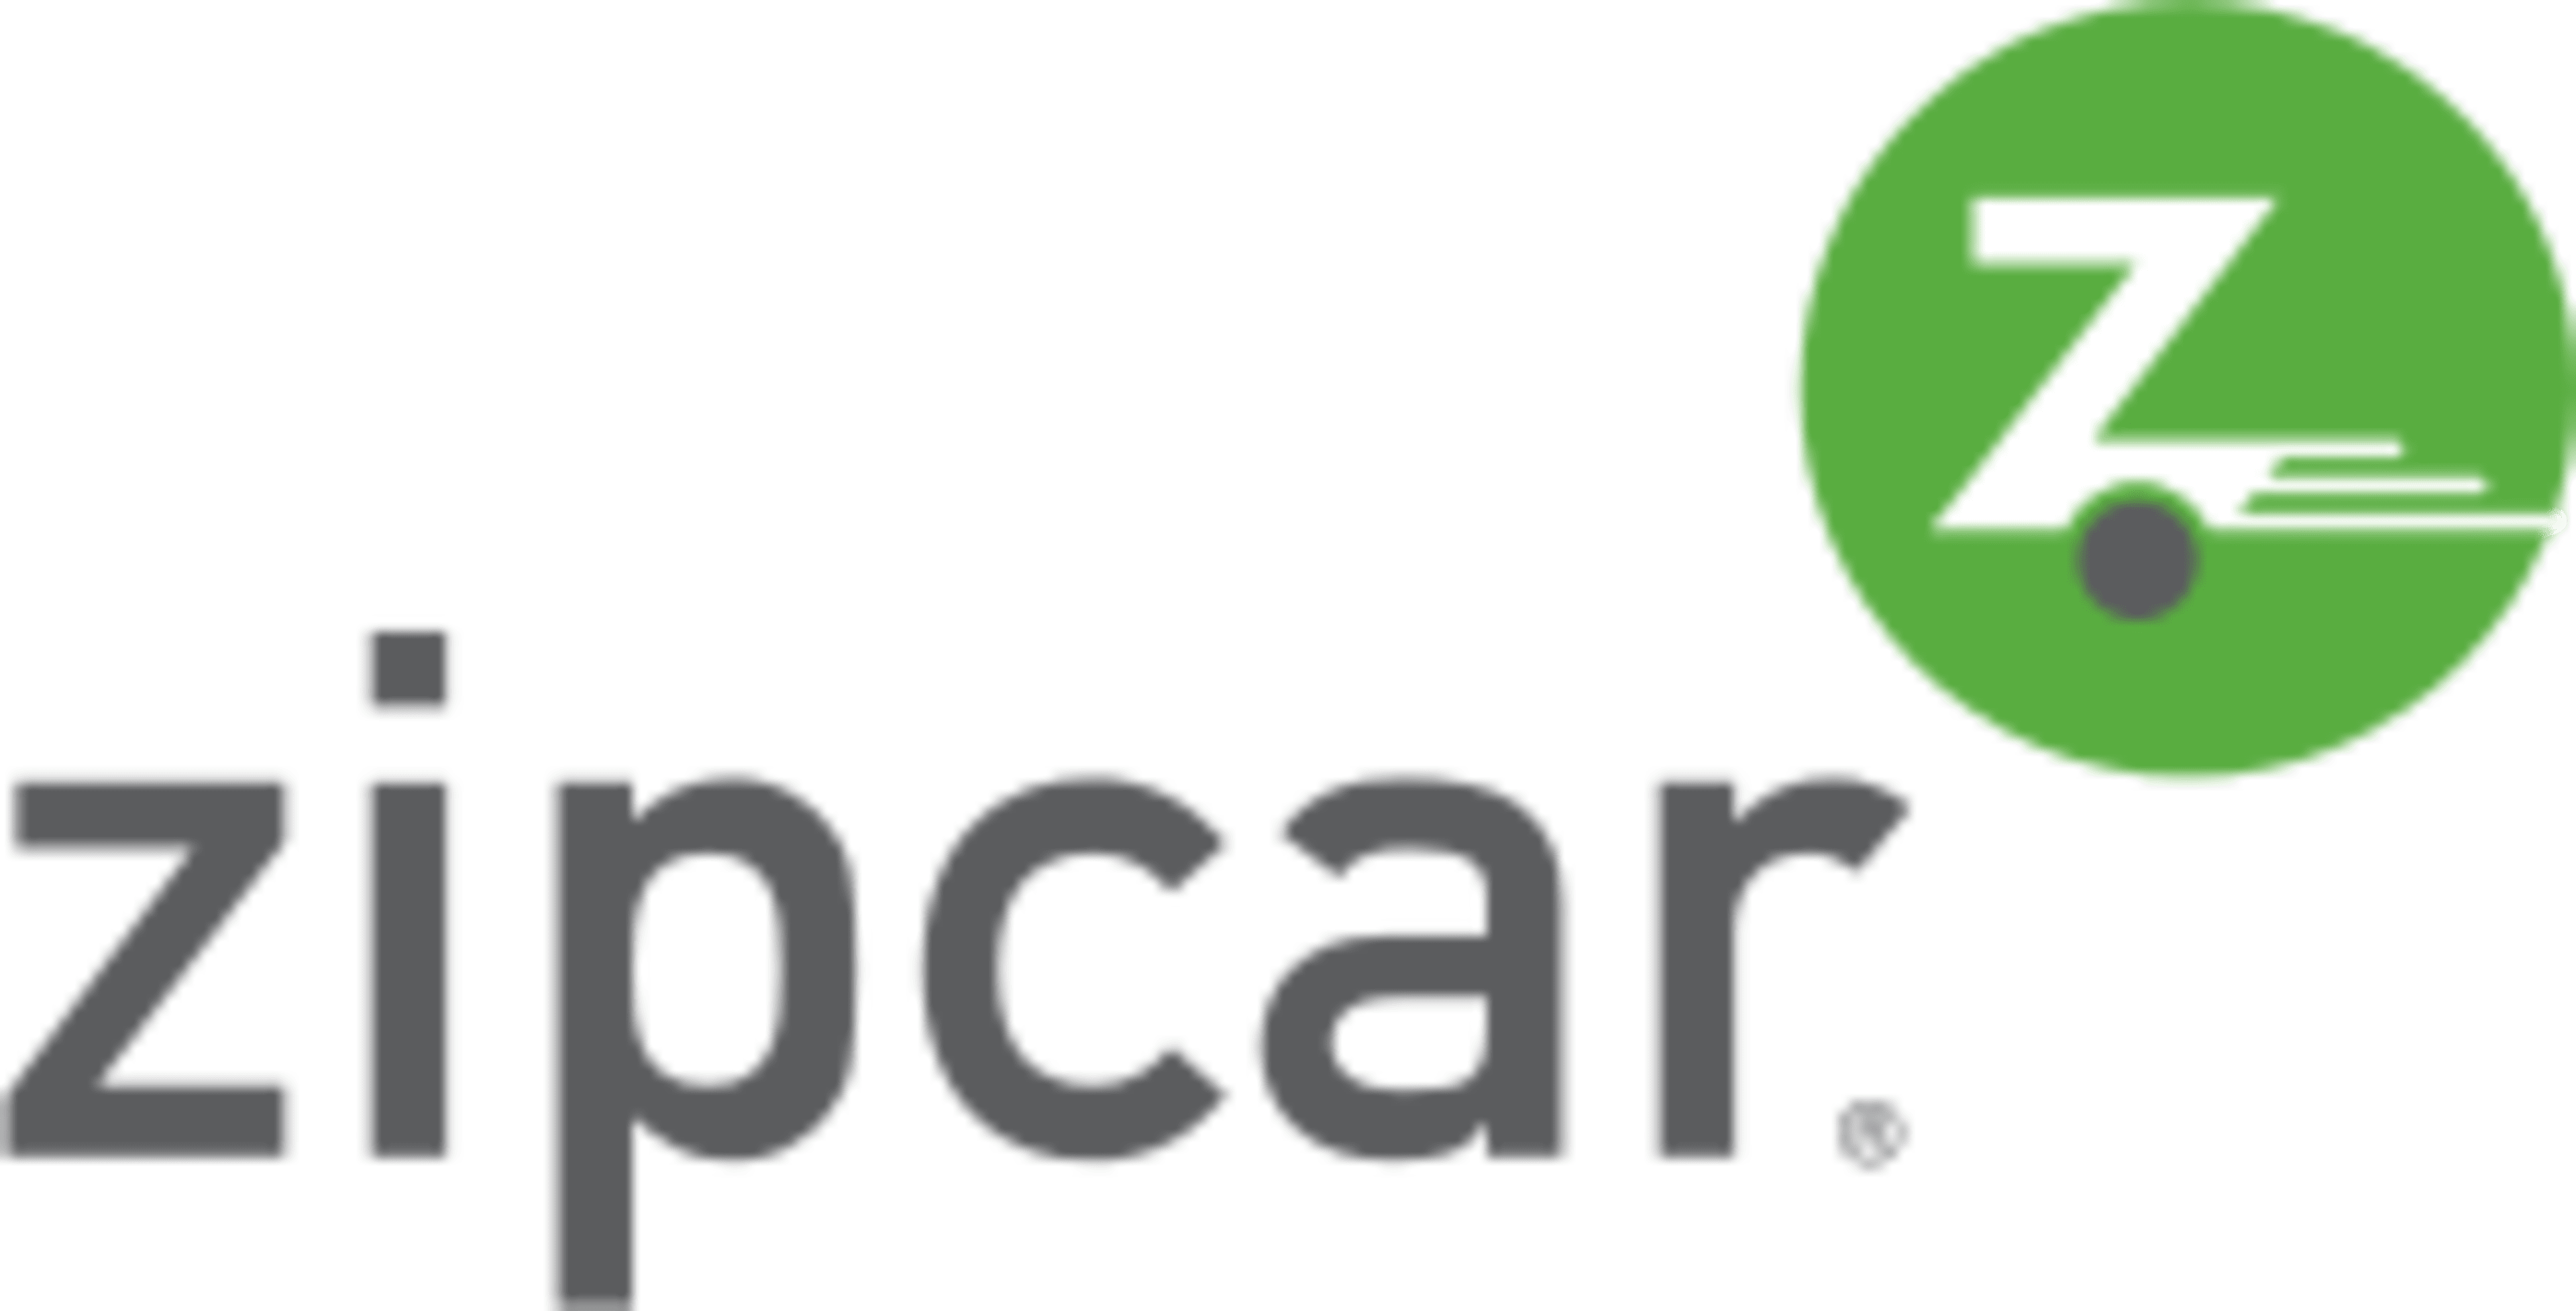 ZipcarCode